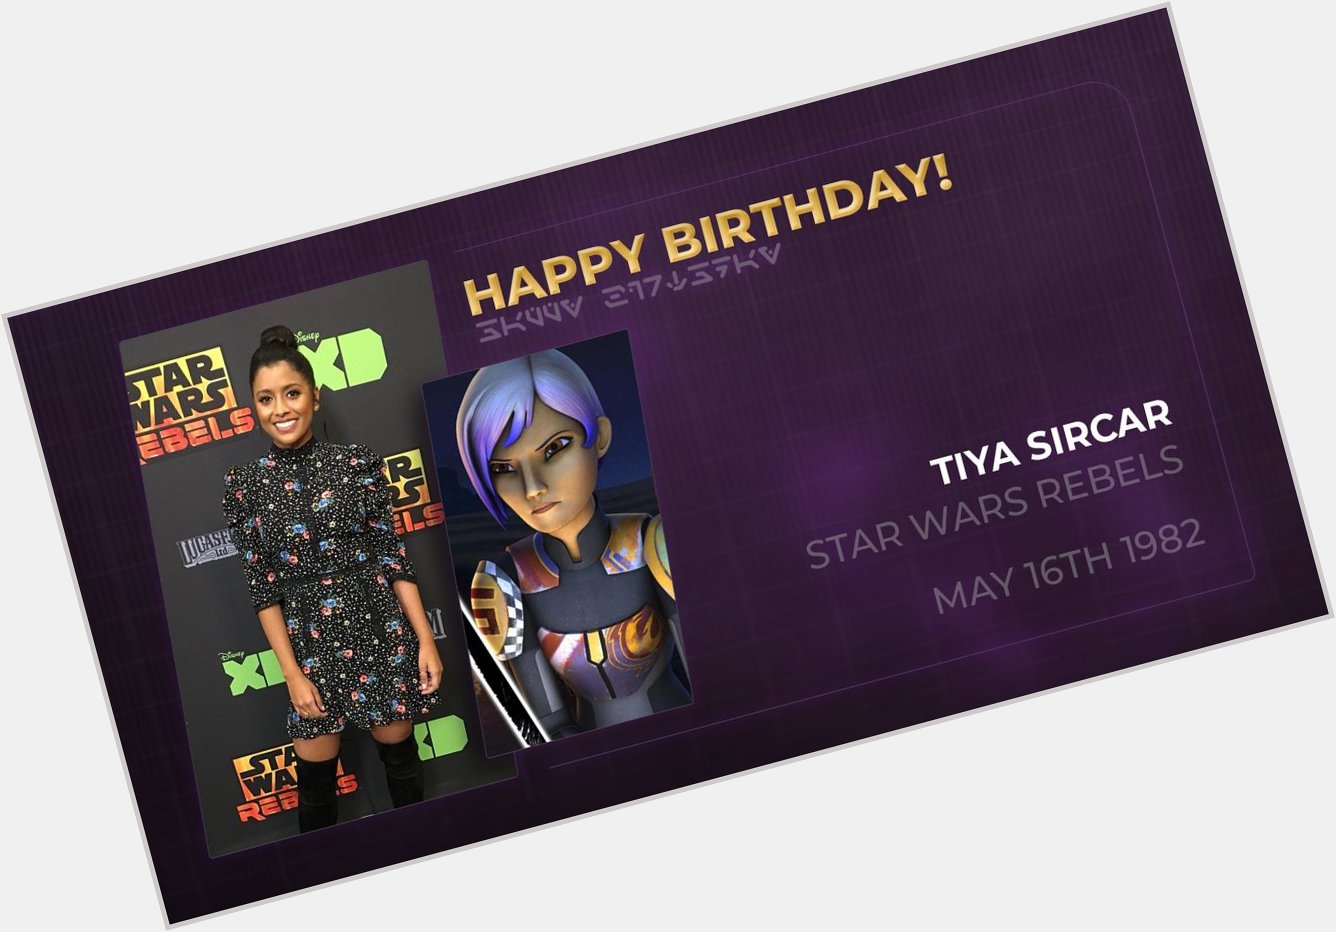 Happy birthday to Tiya Sircar, who voiced Sabine Wren in Star Wars Rebels!   